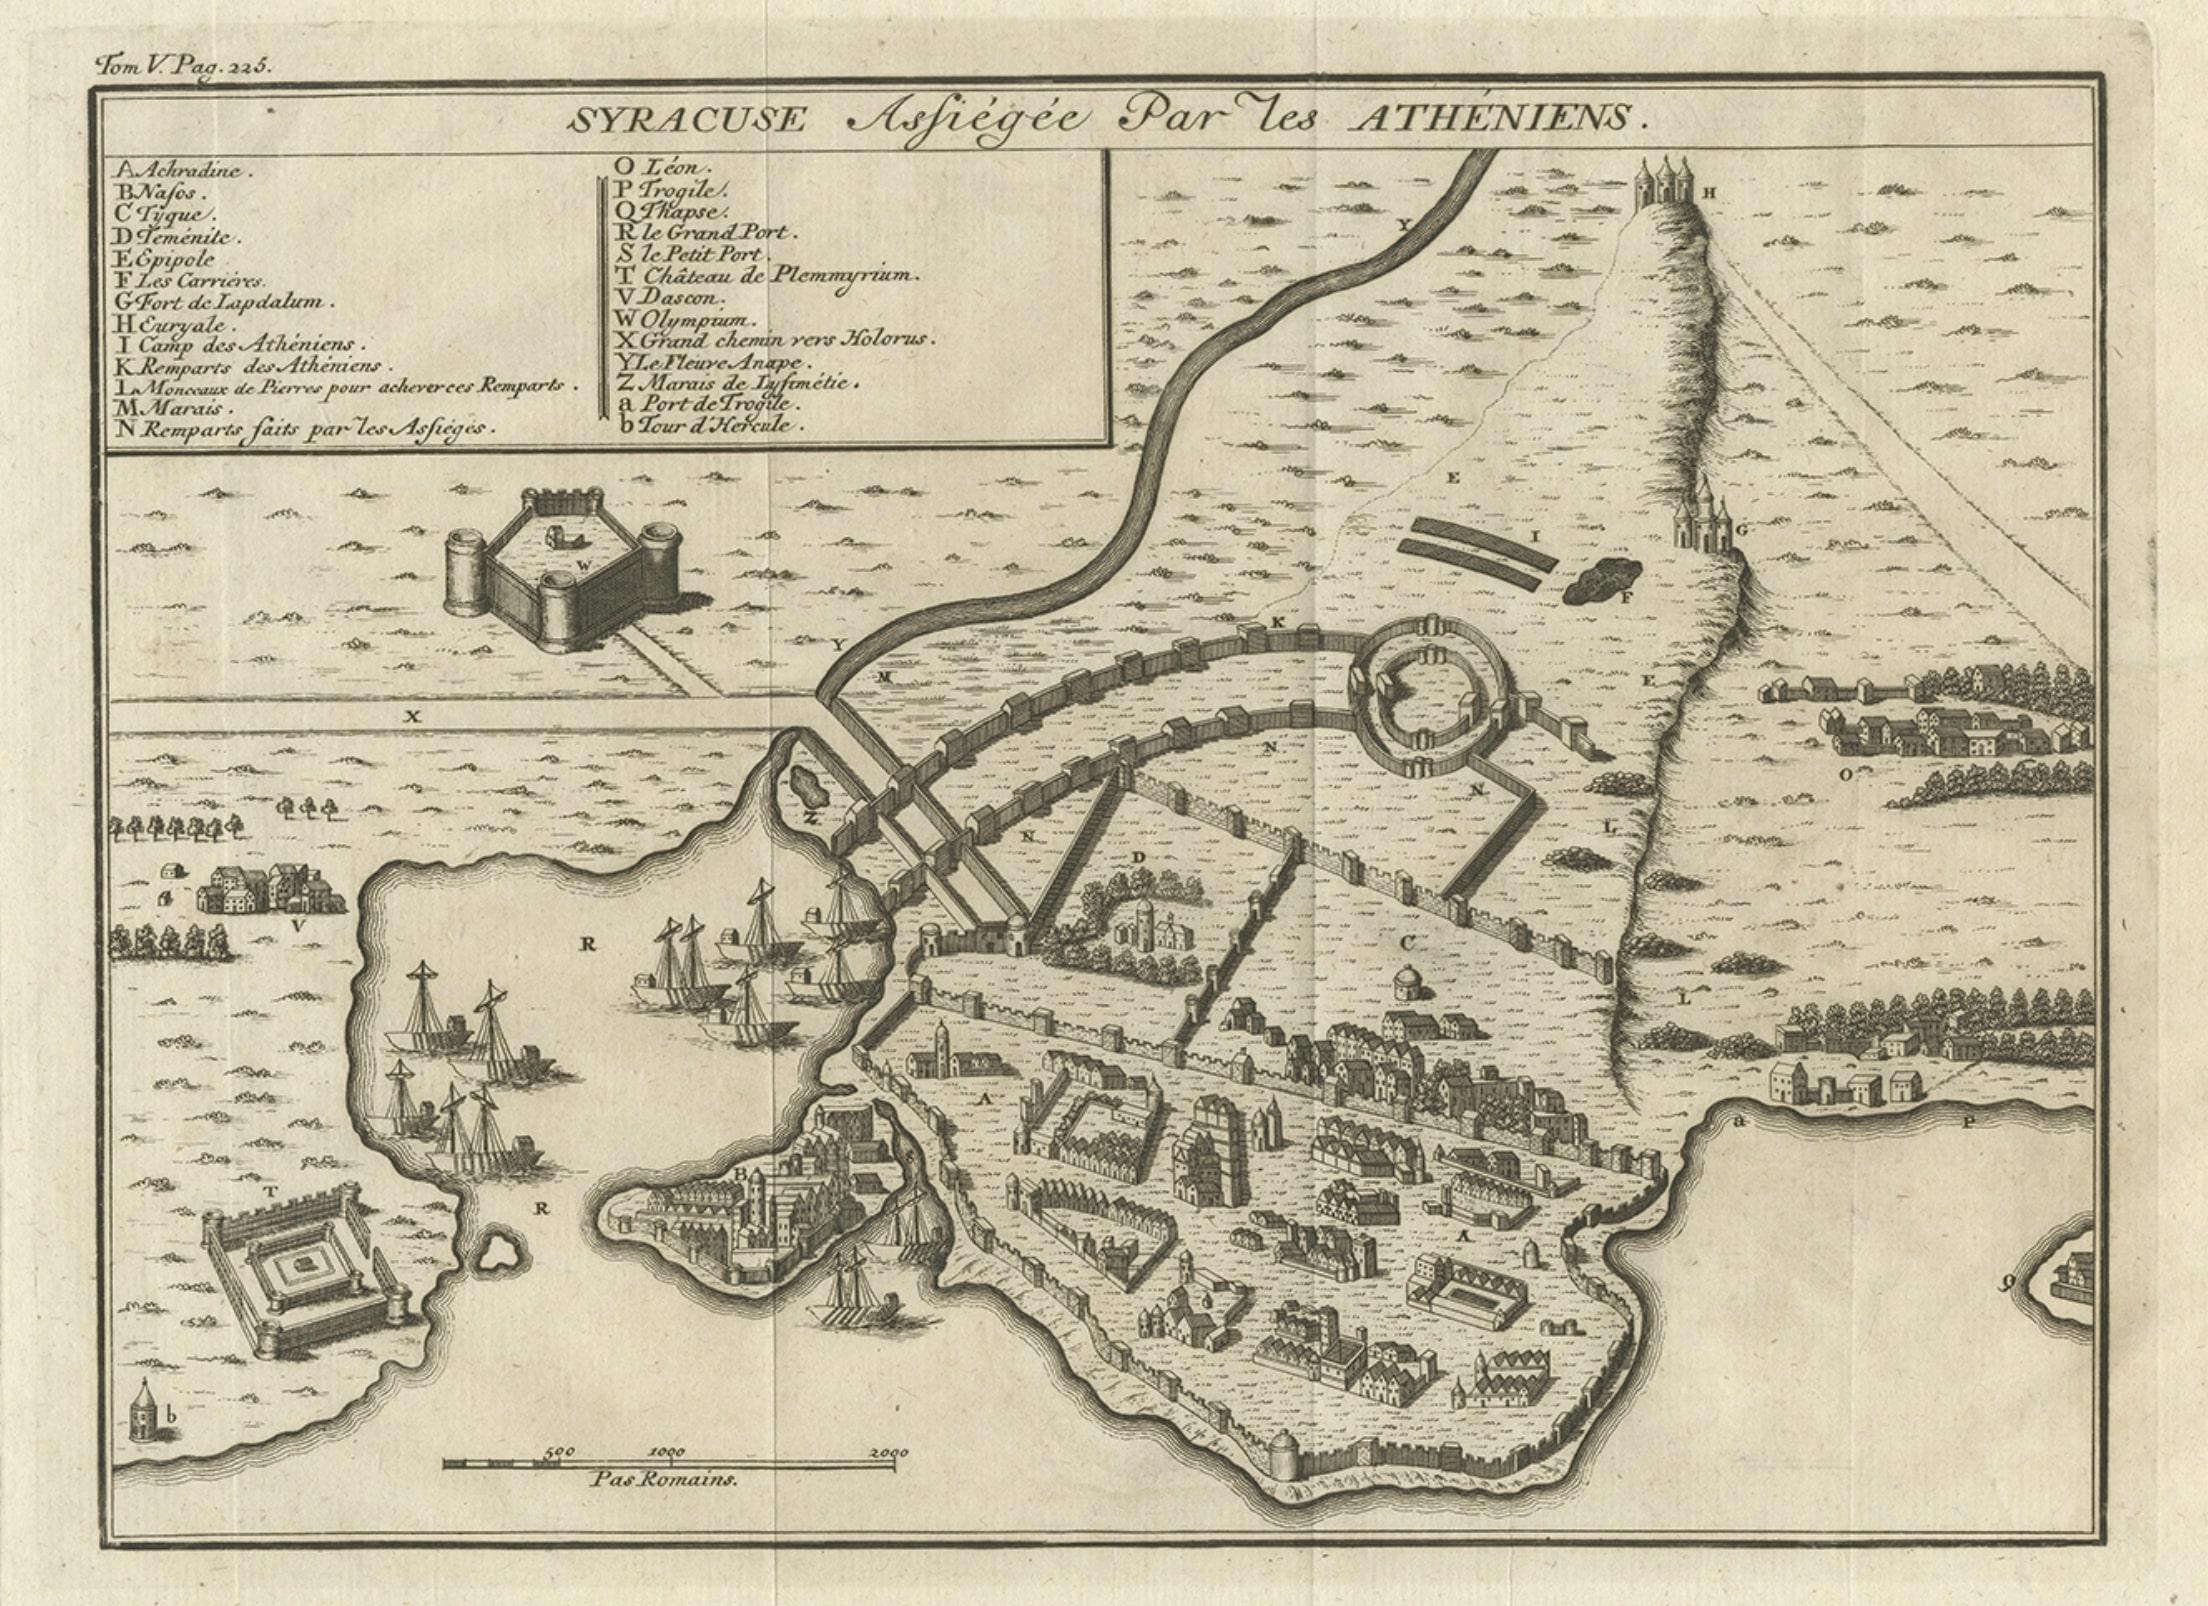 siege of syracuse map